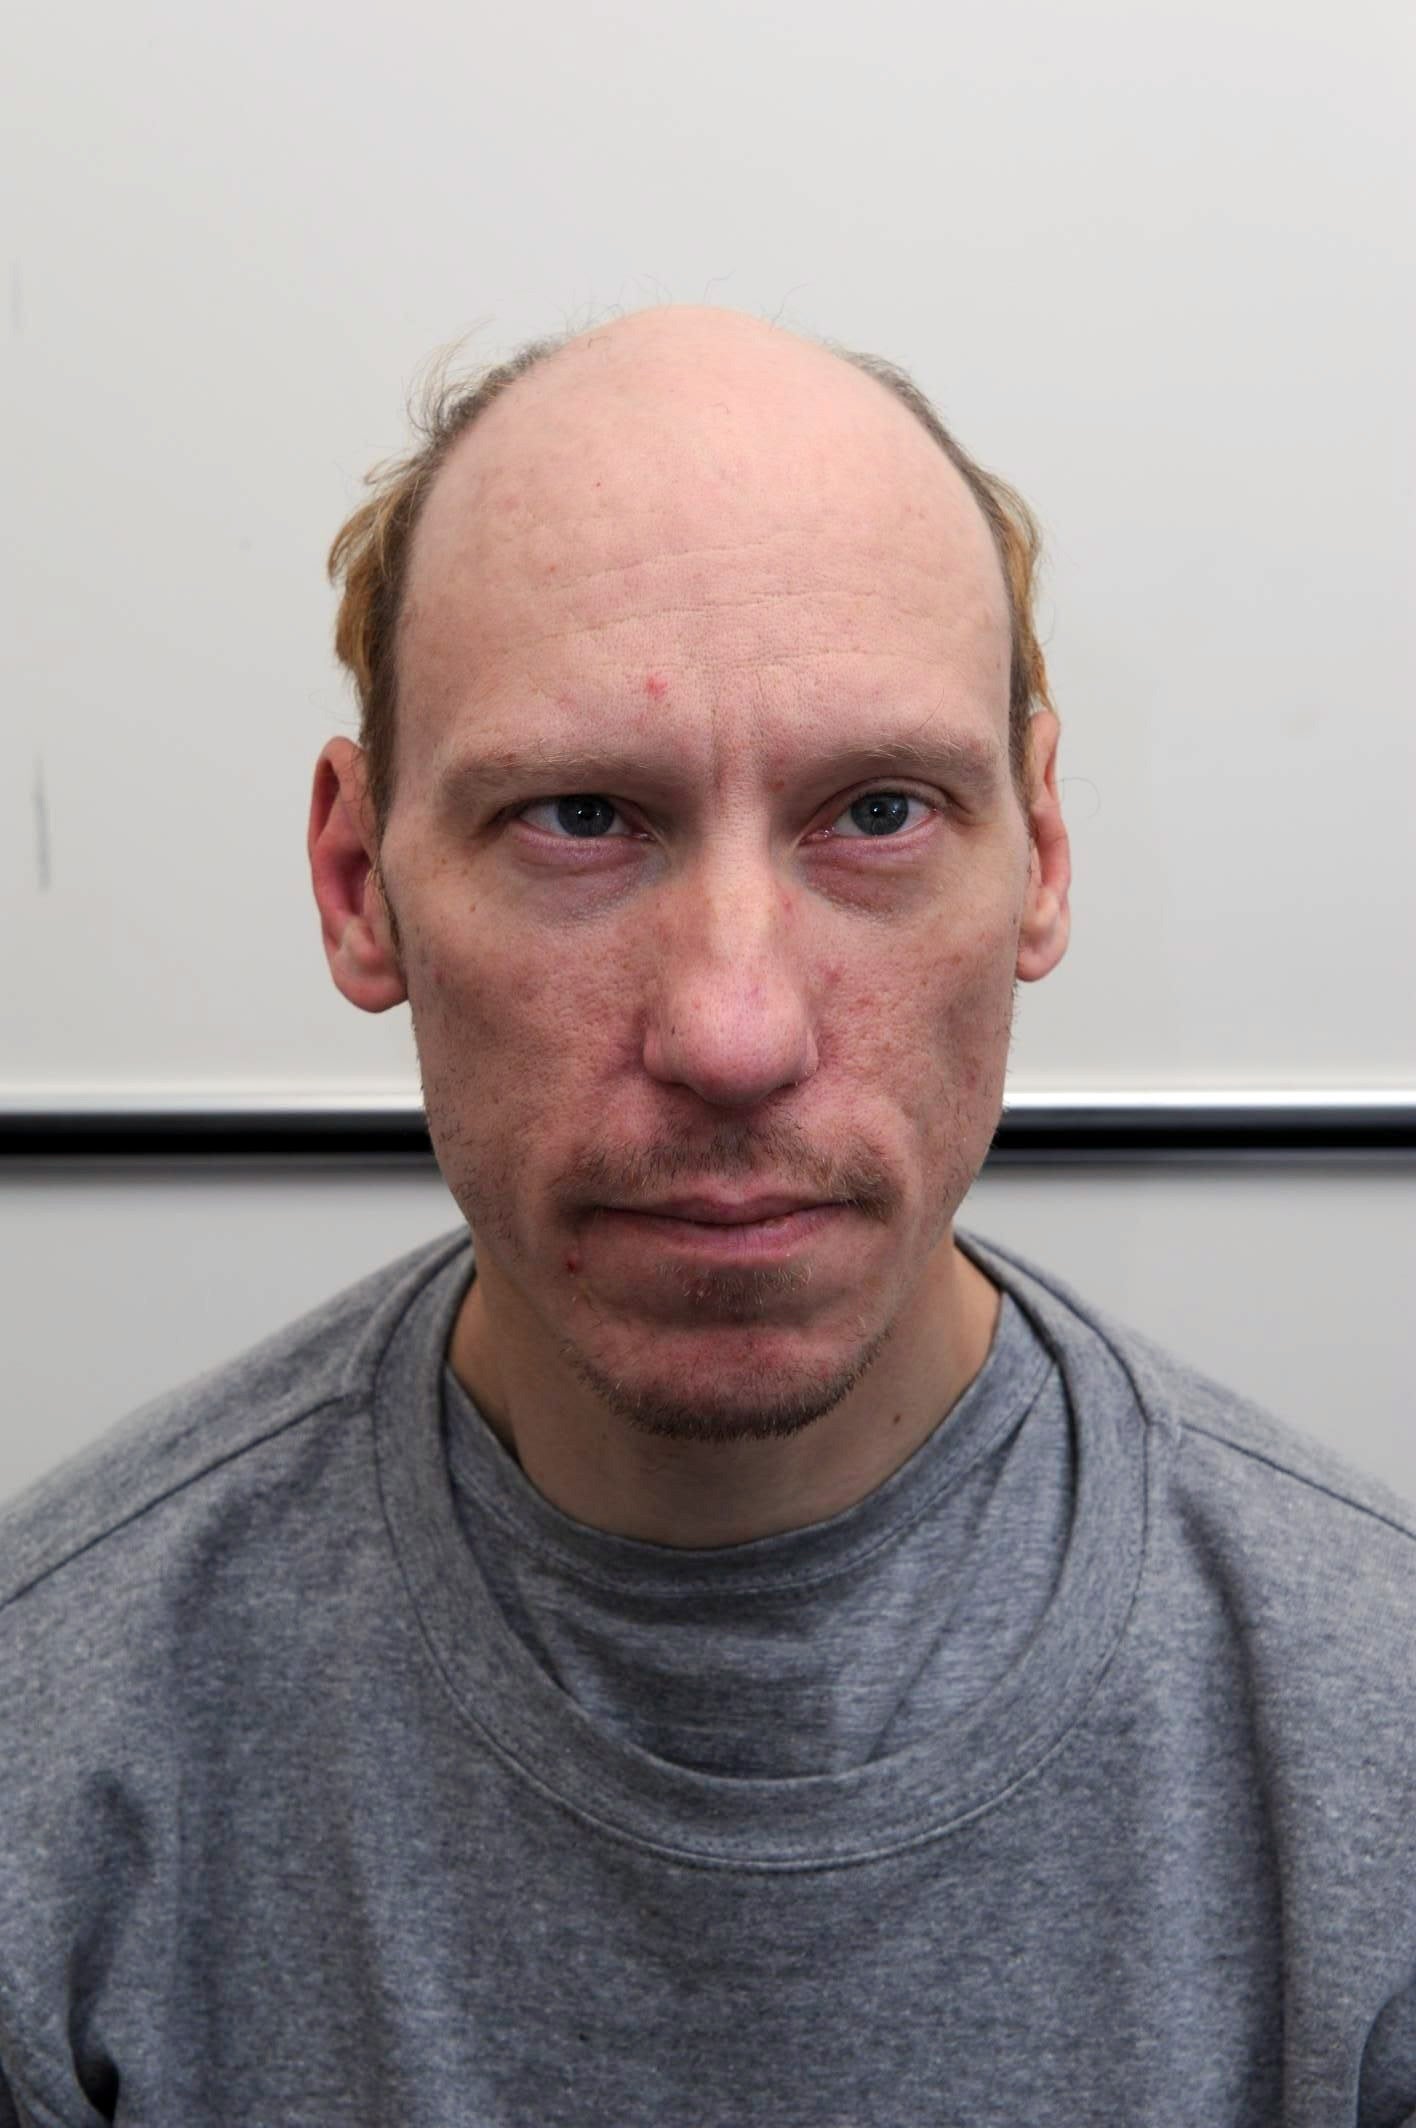 Serial killer Stephen Port received a whole-life sentence in November 2016.